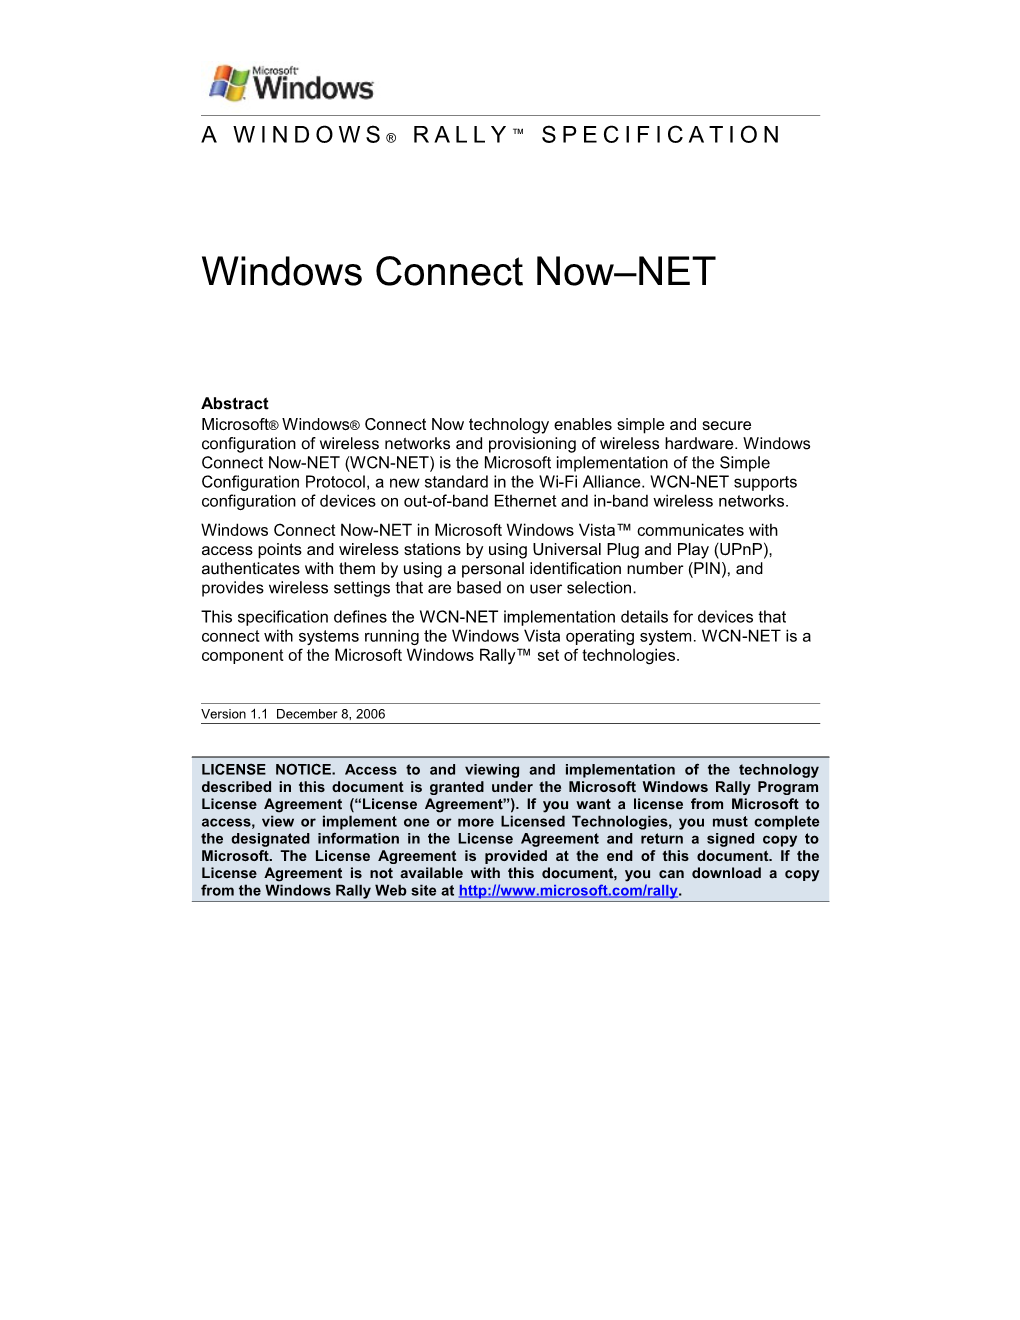 Windows Connect Now NET